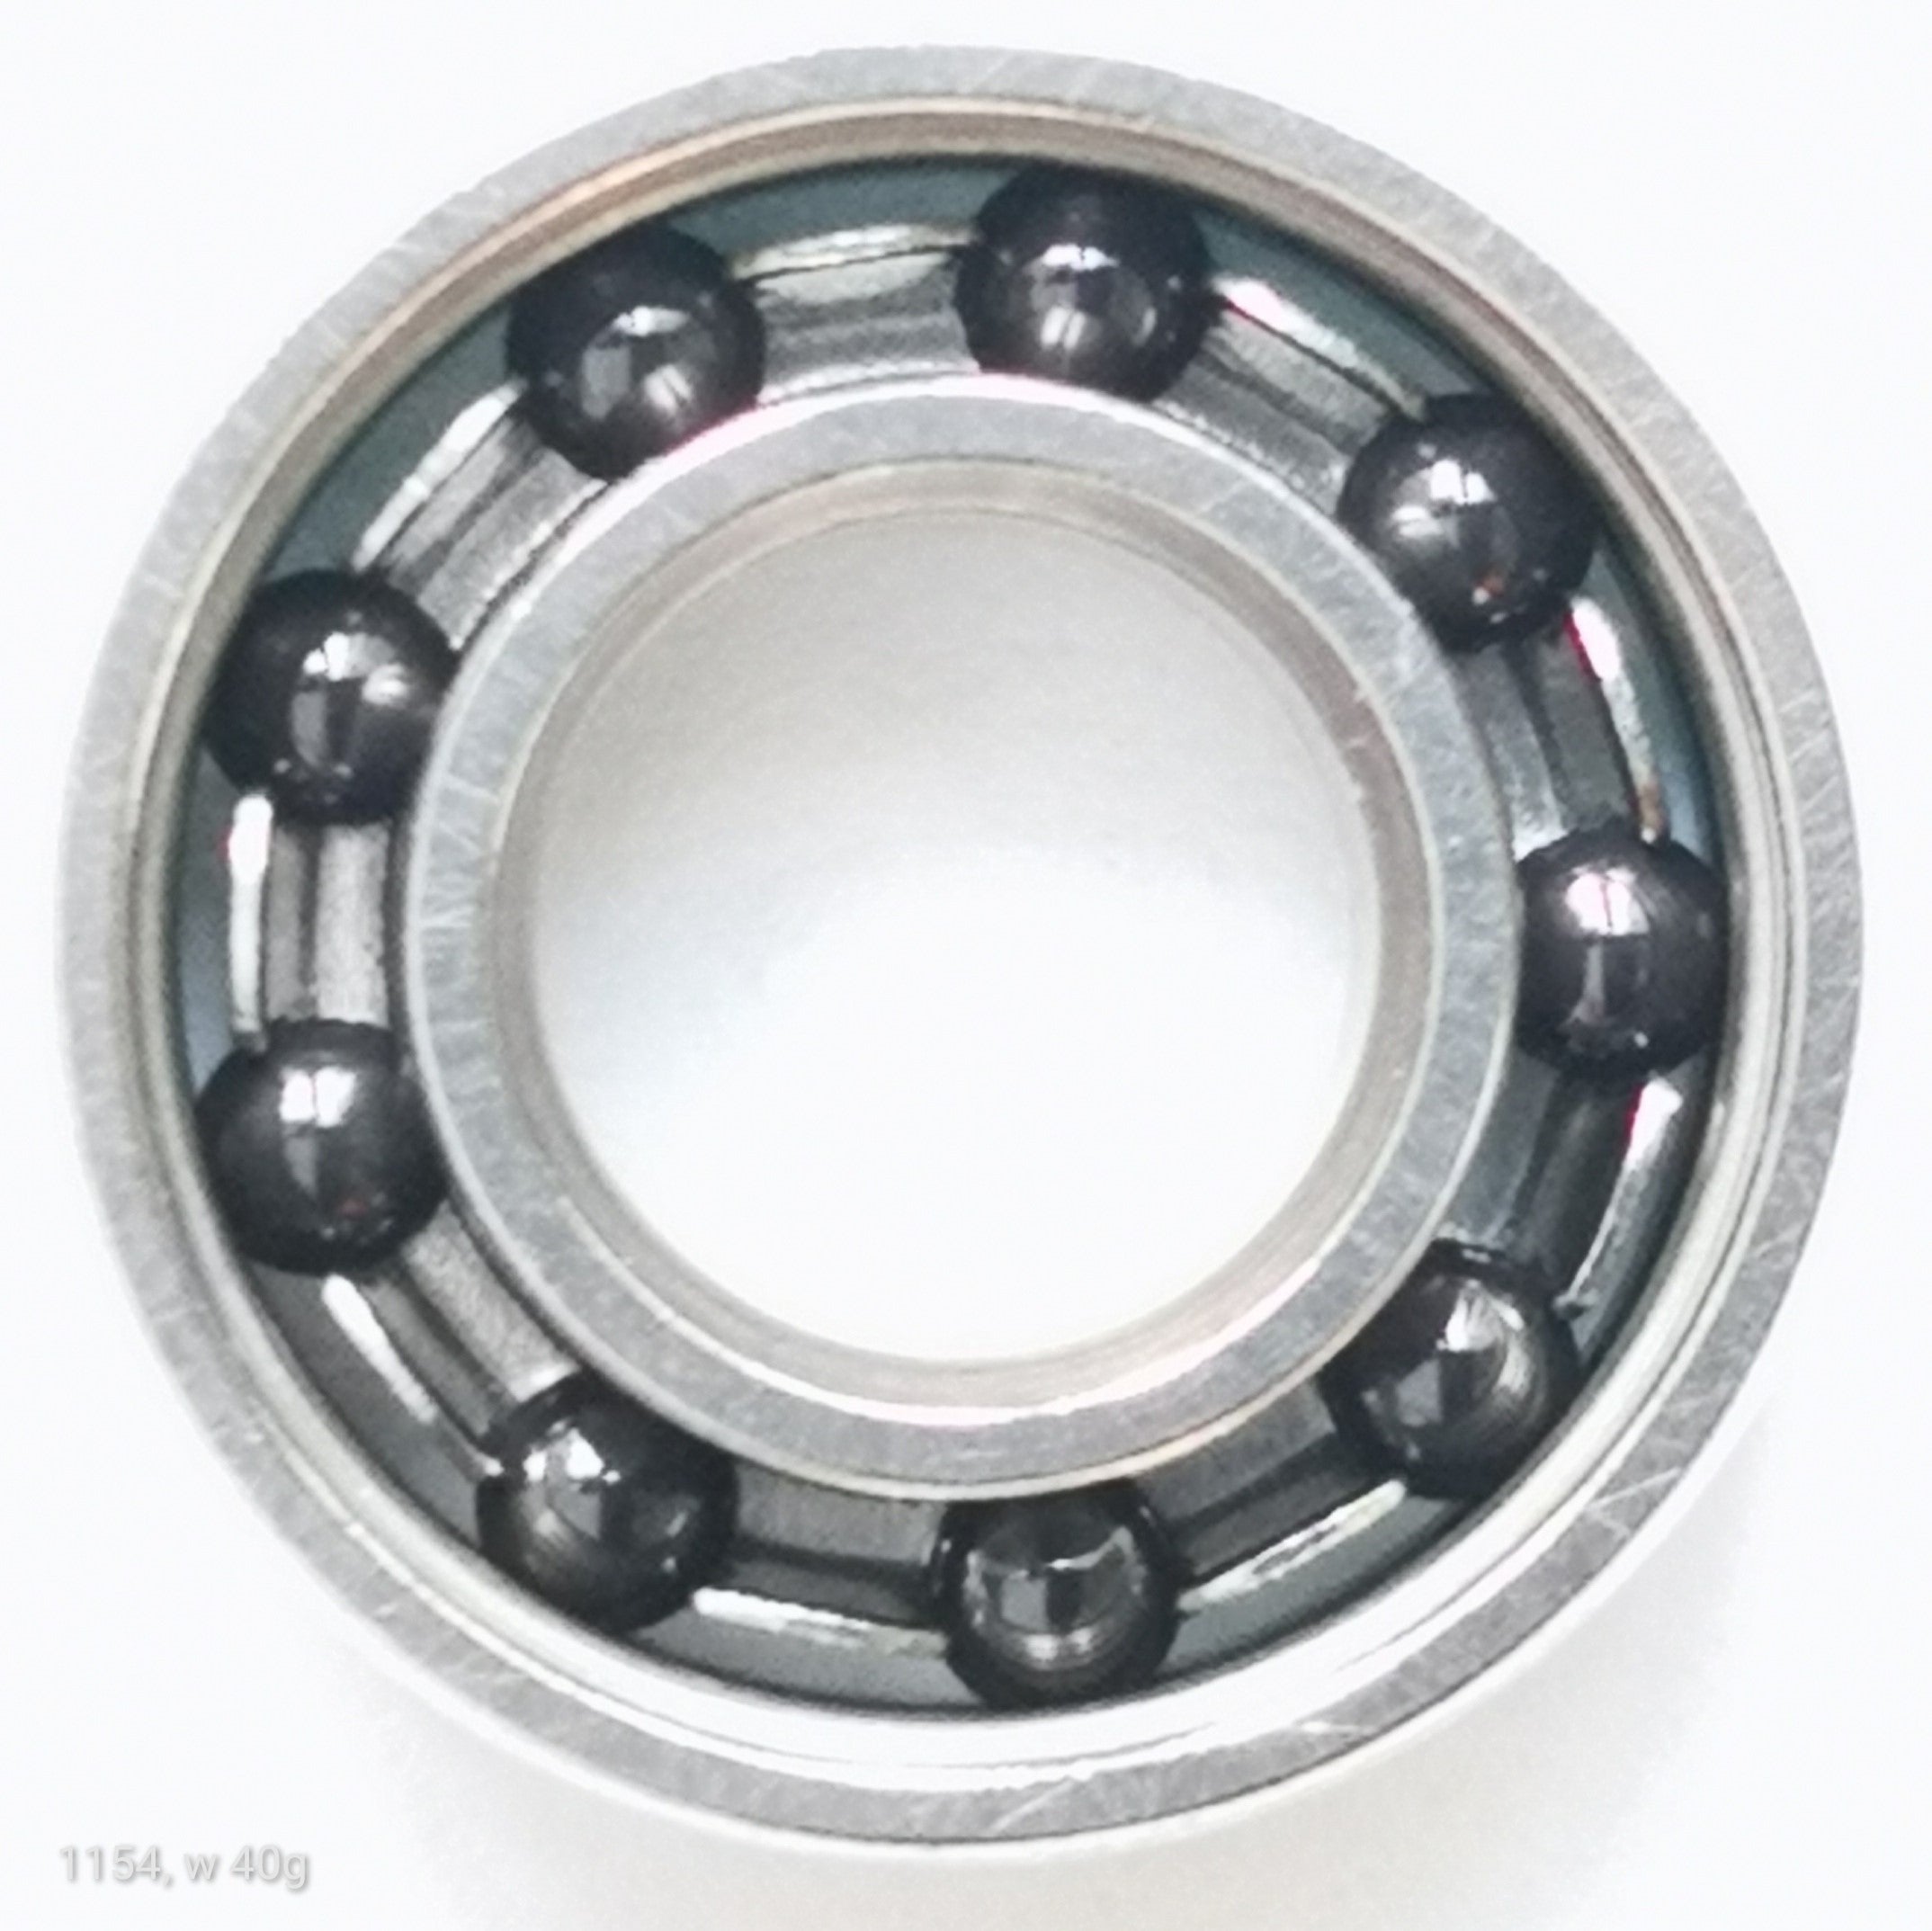 Roro Ceramic Ball Spool Bearings for Baitcasting Reel - RORO LURE